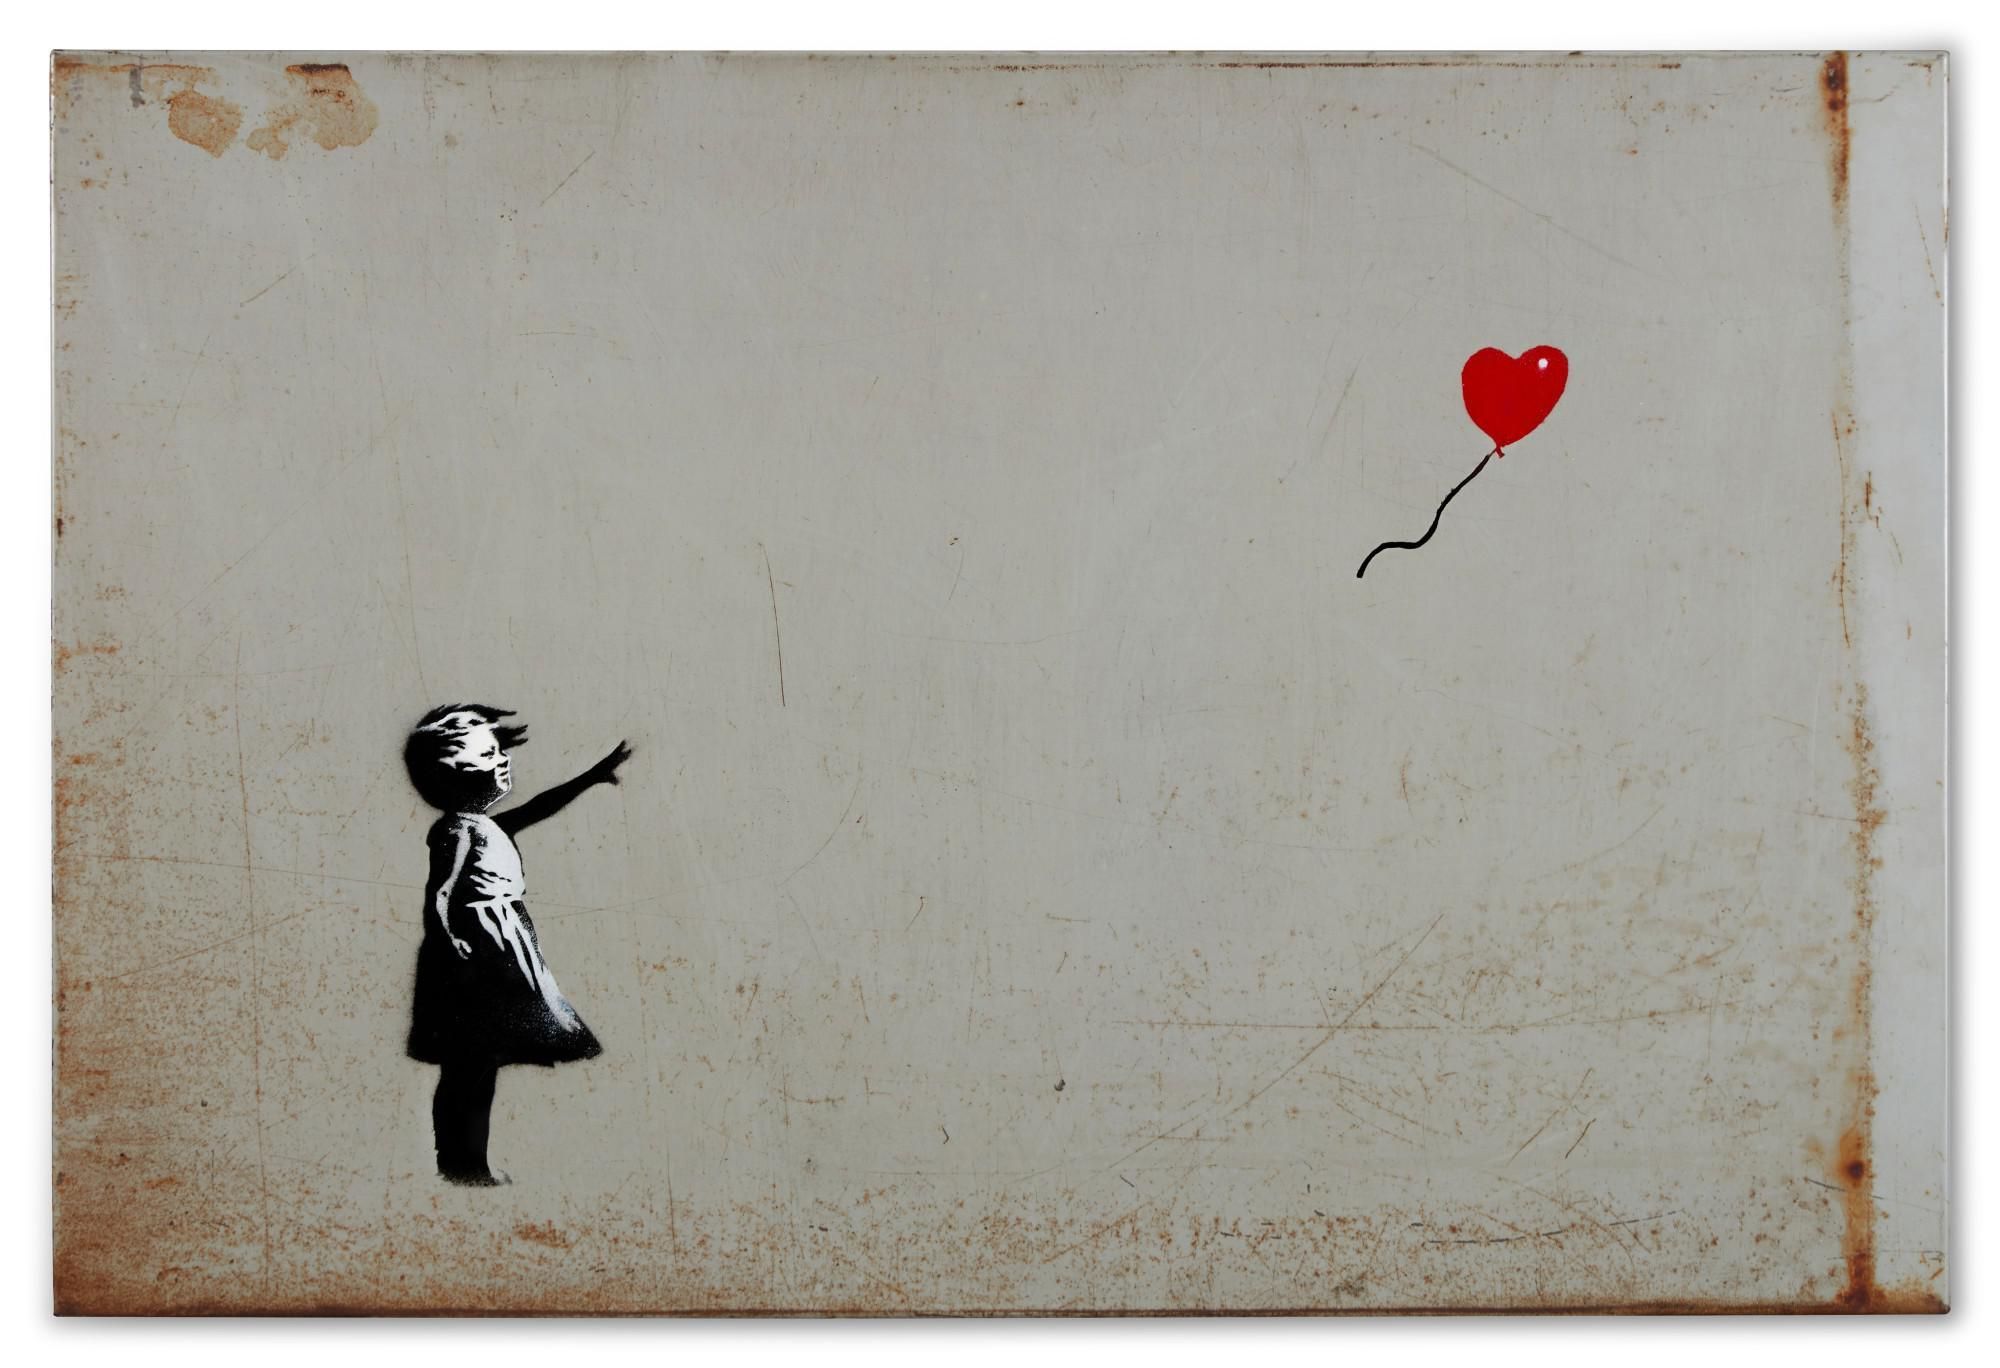 Stencil graffiti, The Thinker, balloon Girl, thinker, banksy, Street art,  Graffiti, Mural, Stencil, Monkey